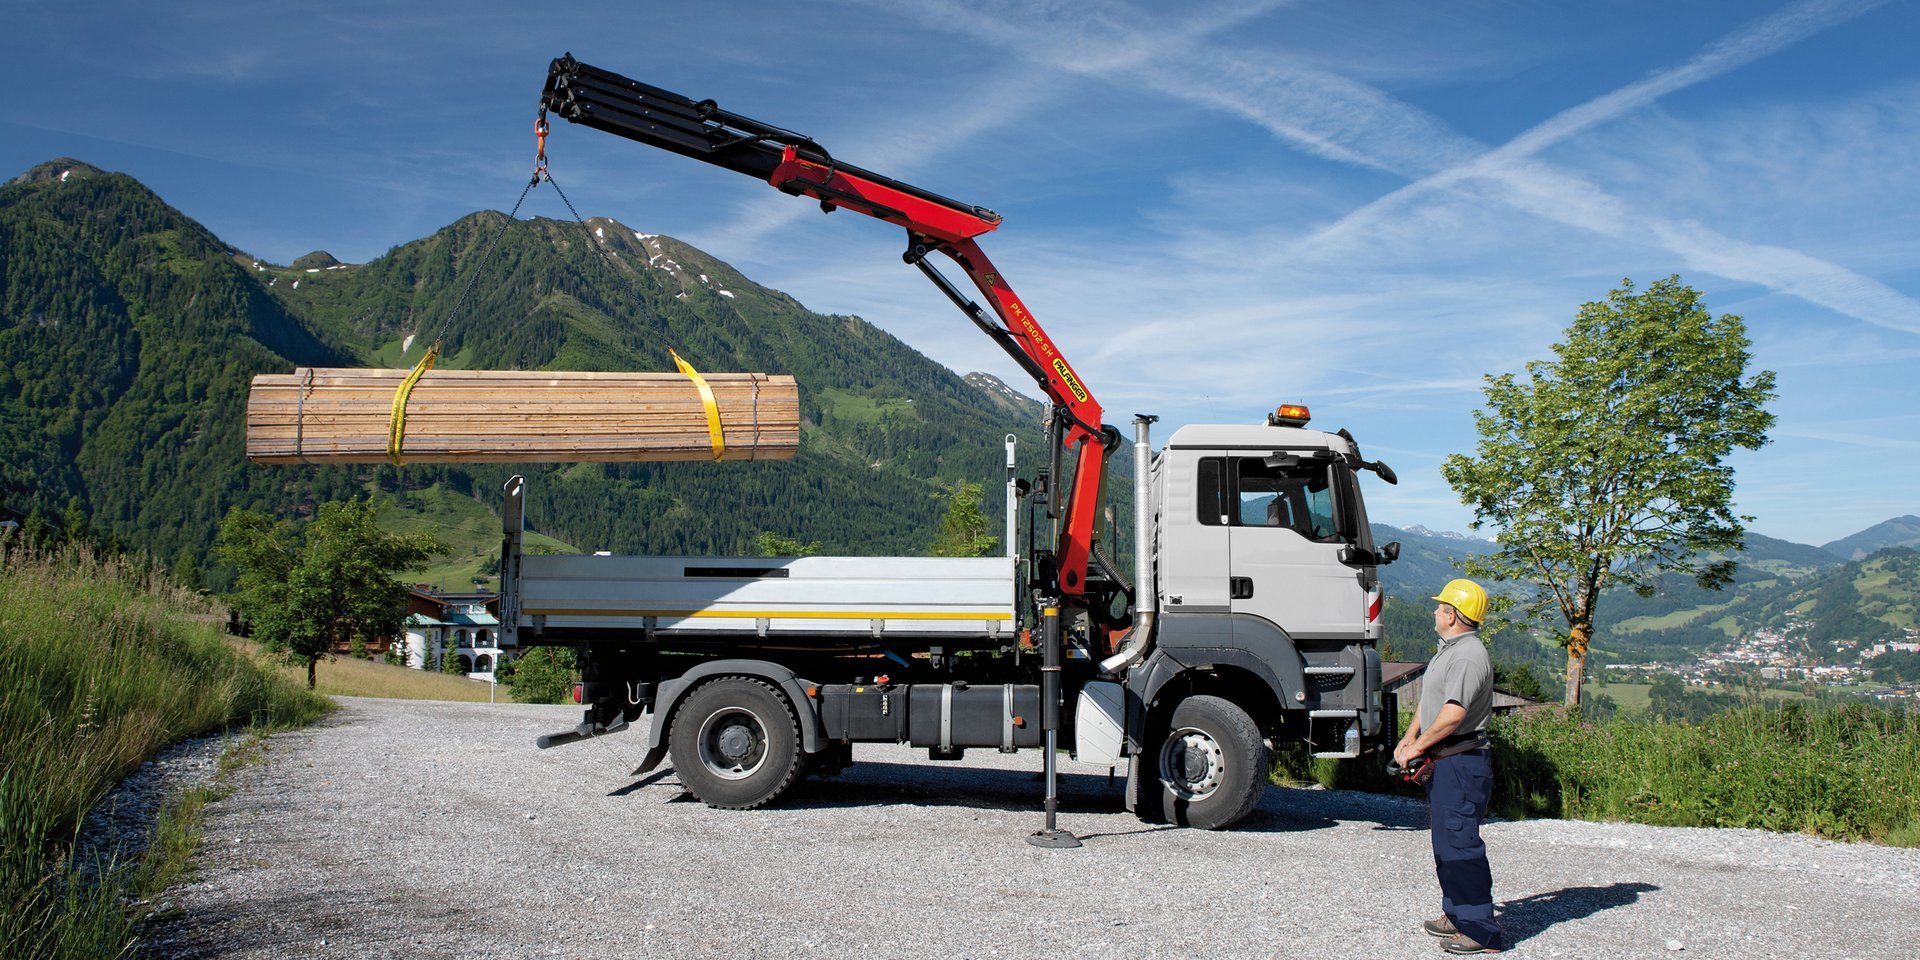 Truck - mounted loader cranes